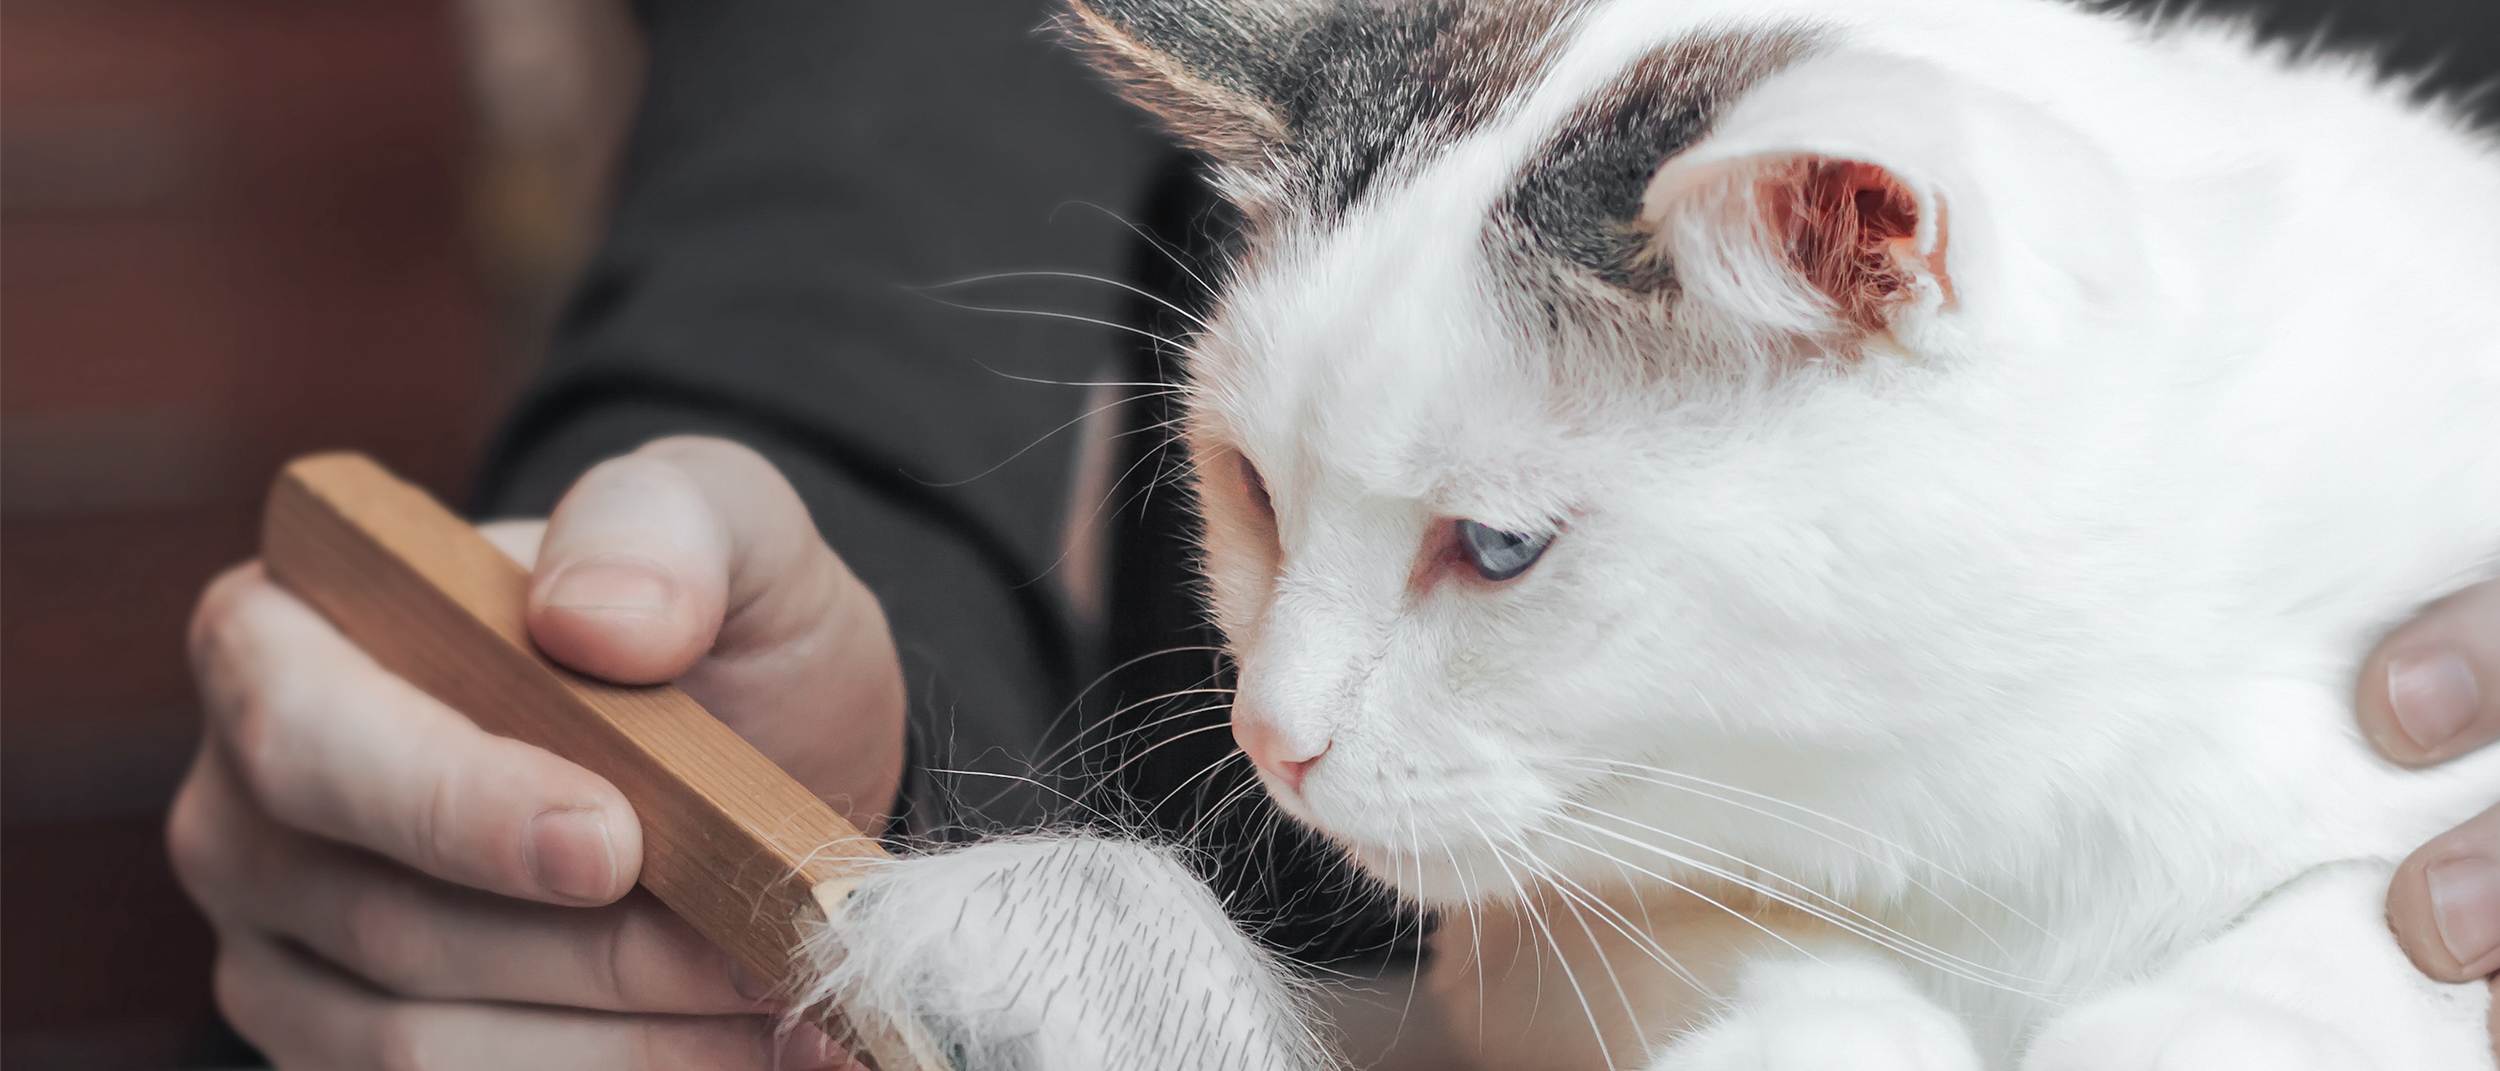 Gato adulto acostado mirando un cepillo de aseo lleno de pelo blanco.